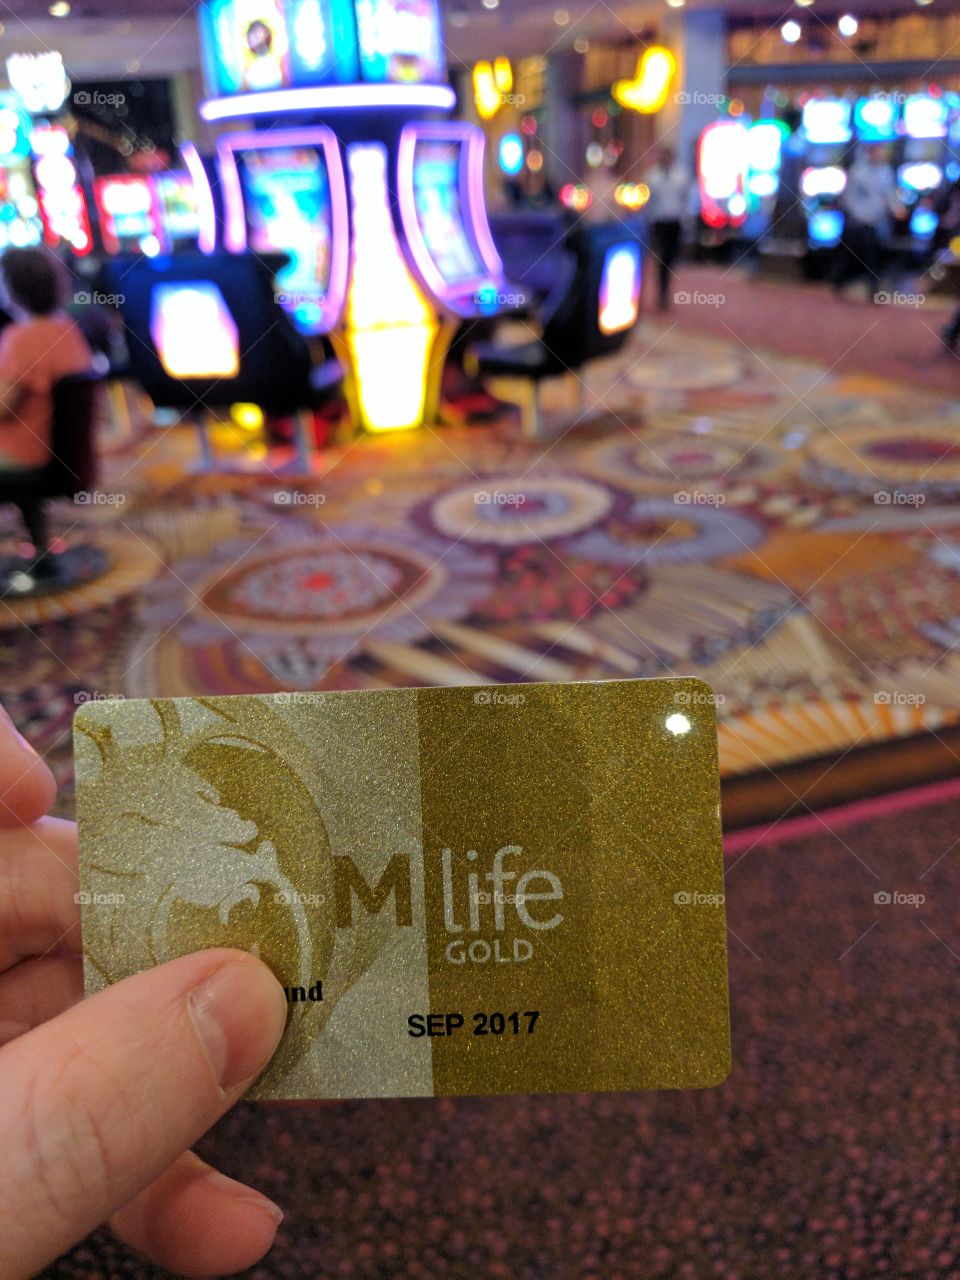 MLife MGM Casino